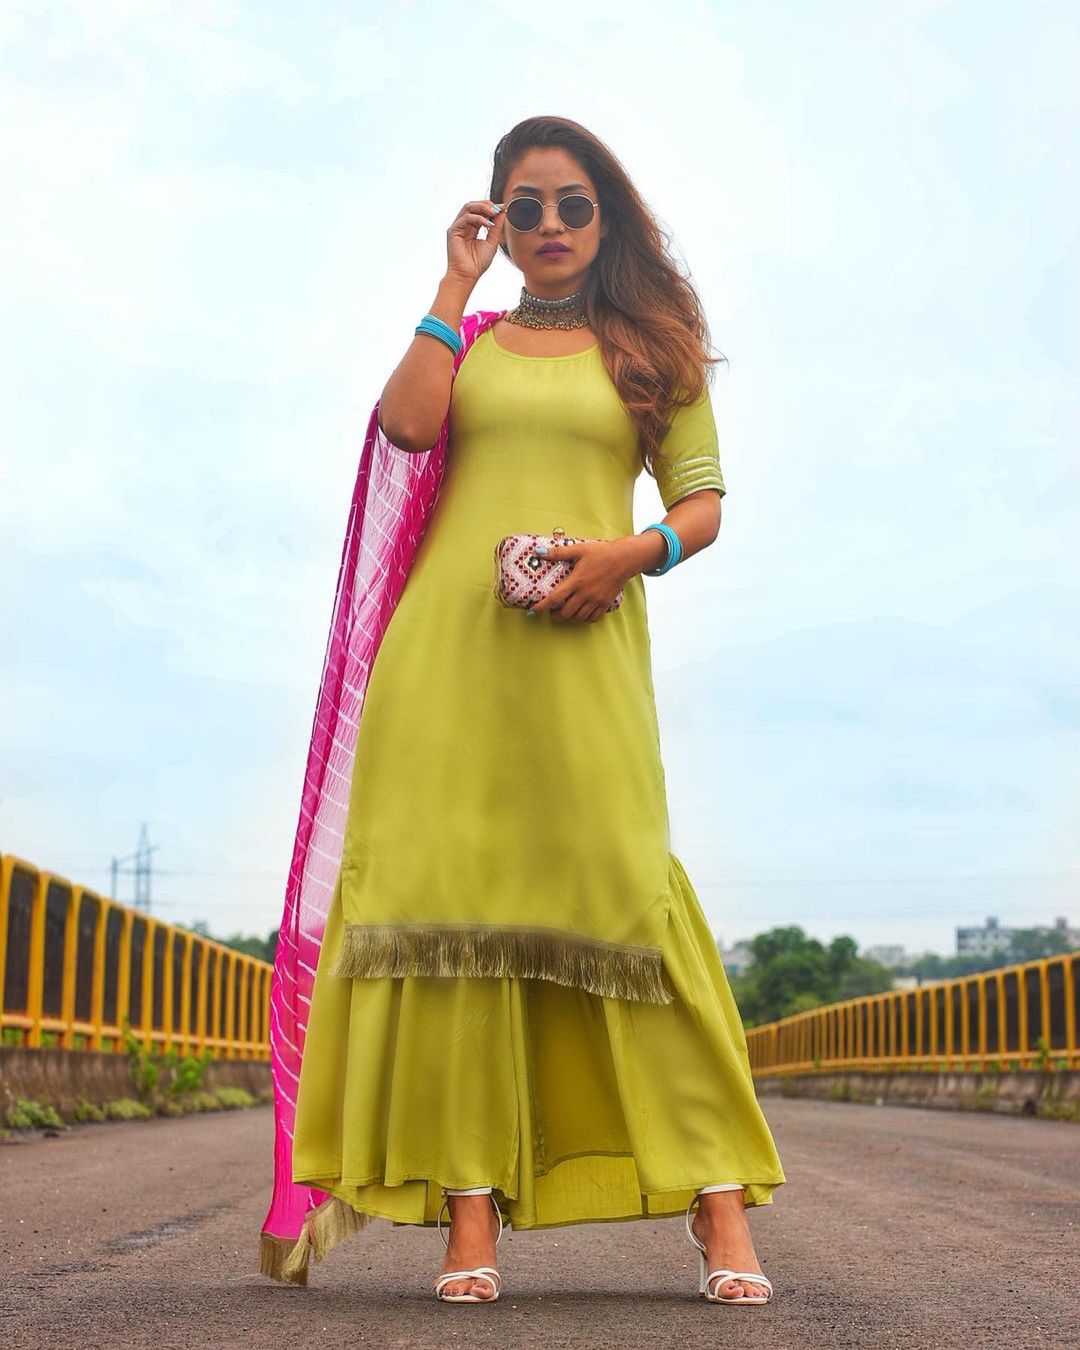 instagram star vaishnavi naik sizzling hot photos leaked on social media